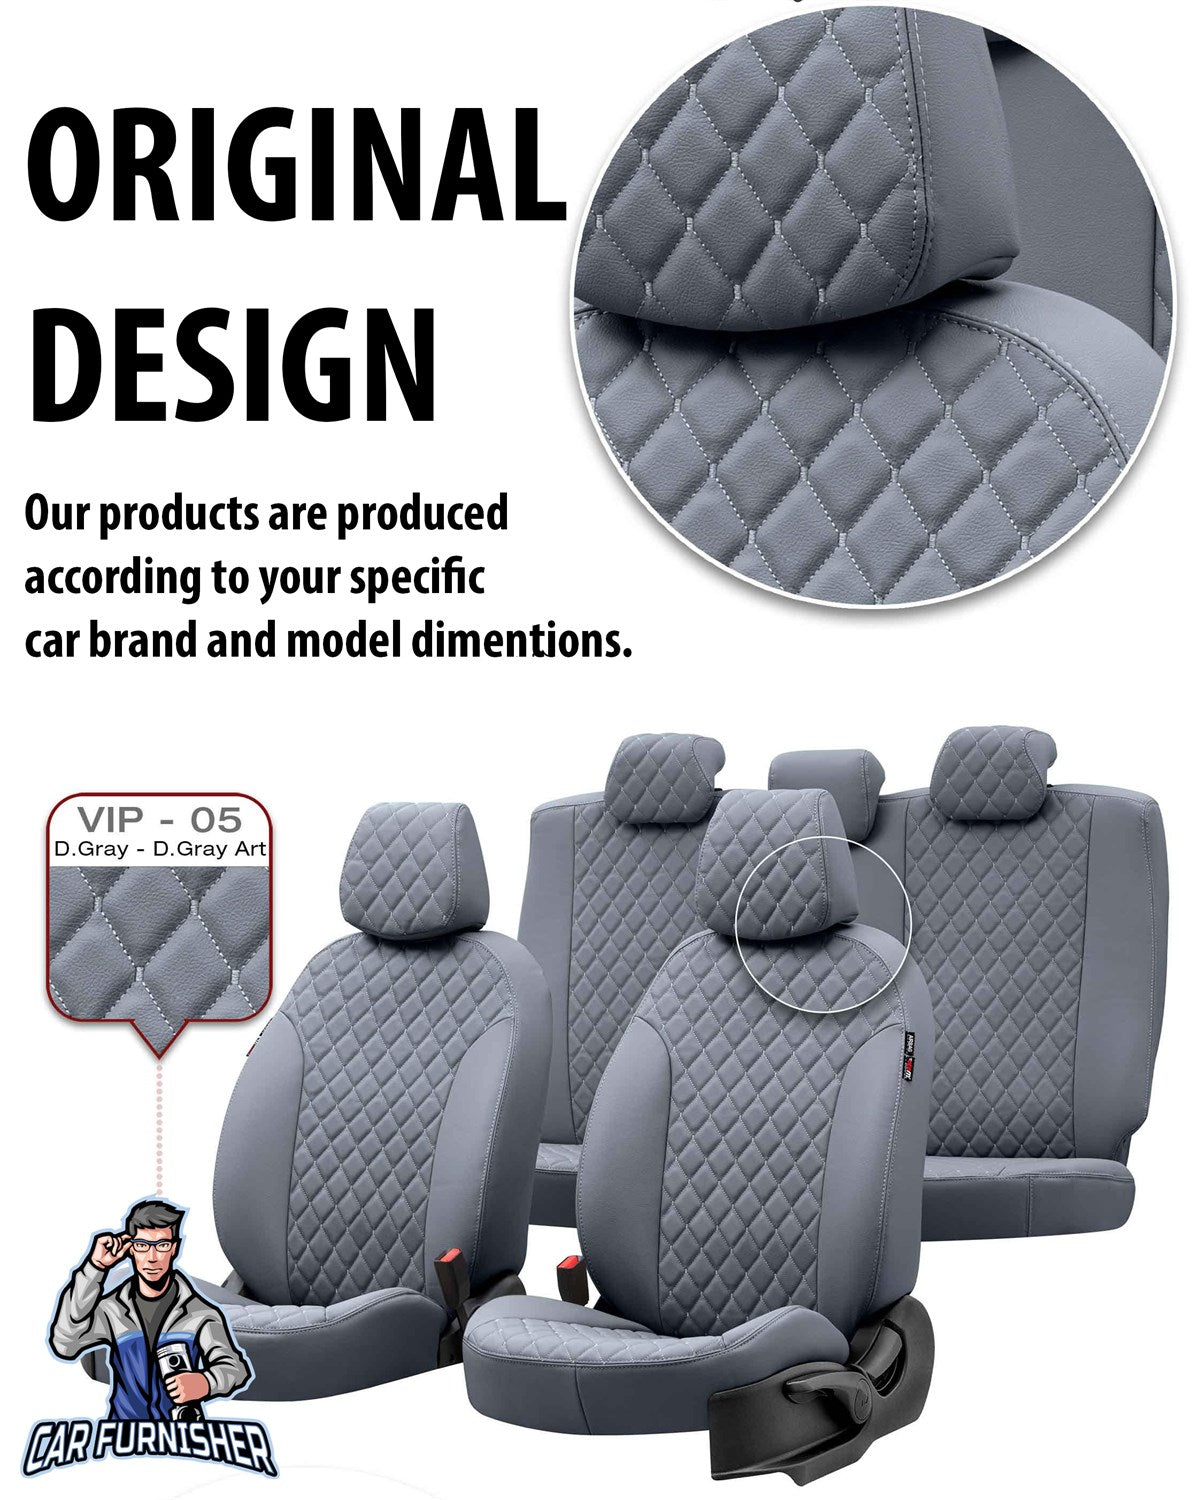 Hyundai Elantra Seat Covers Madrid Leather Design Smoked Leather